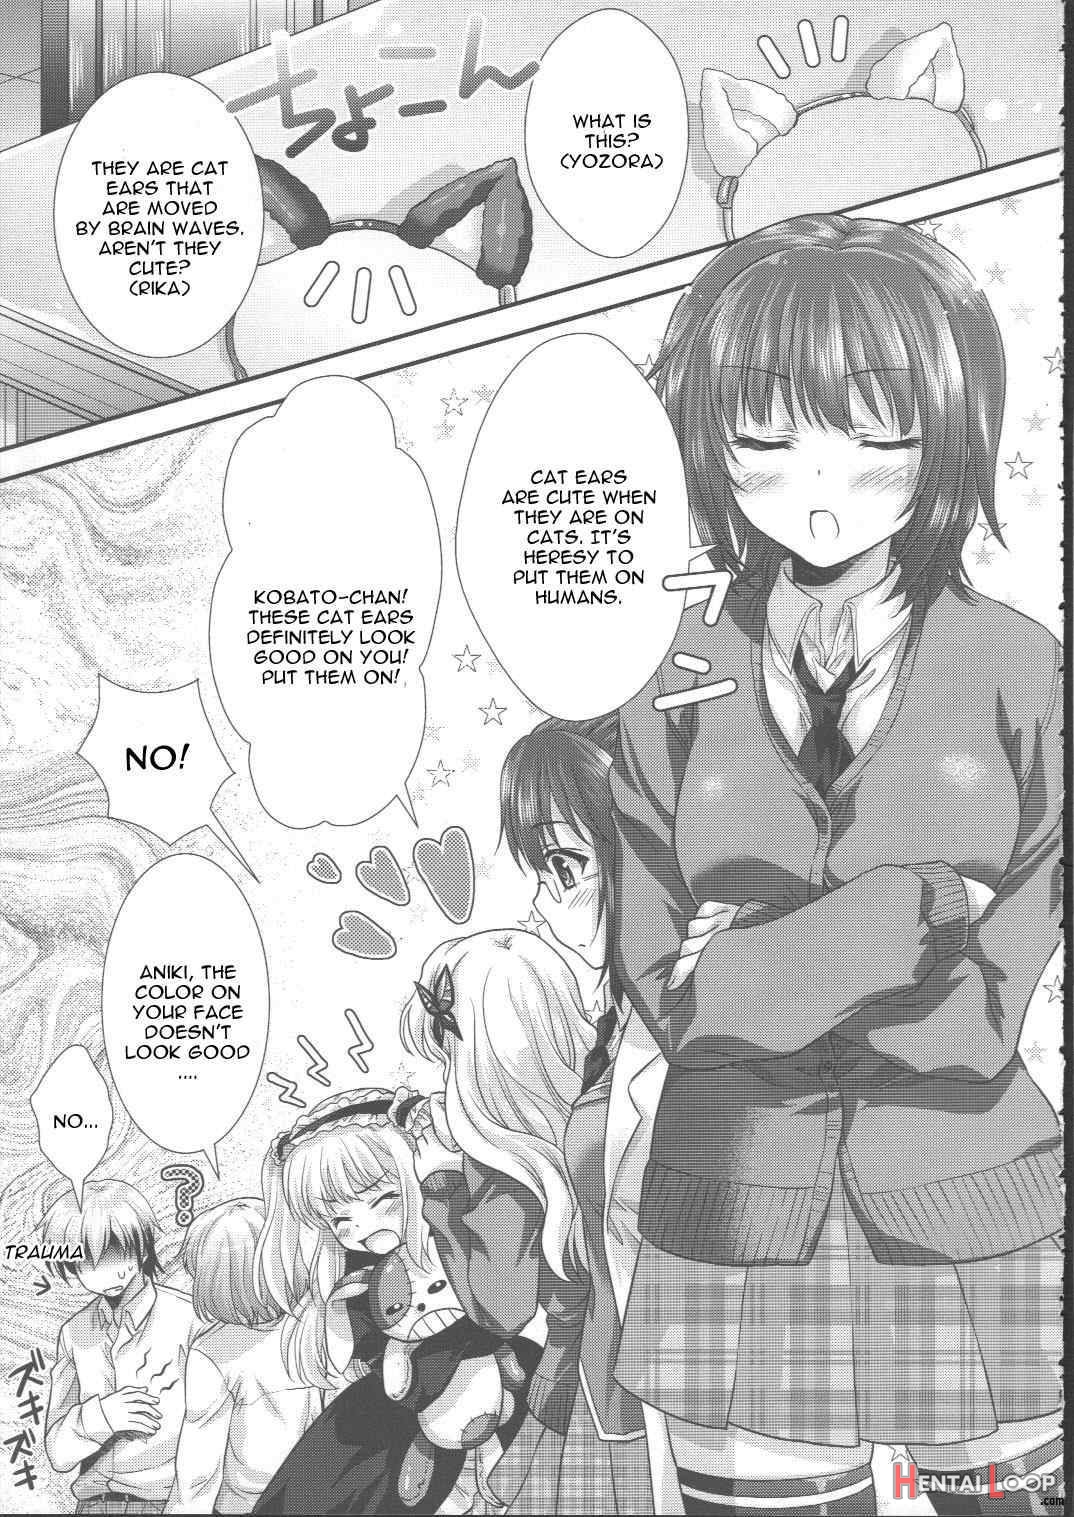 Yozora Neko Overrun page 2